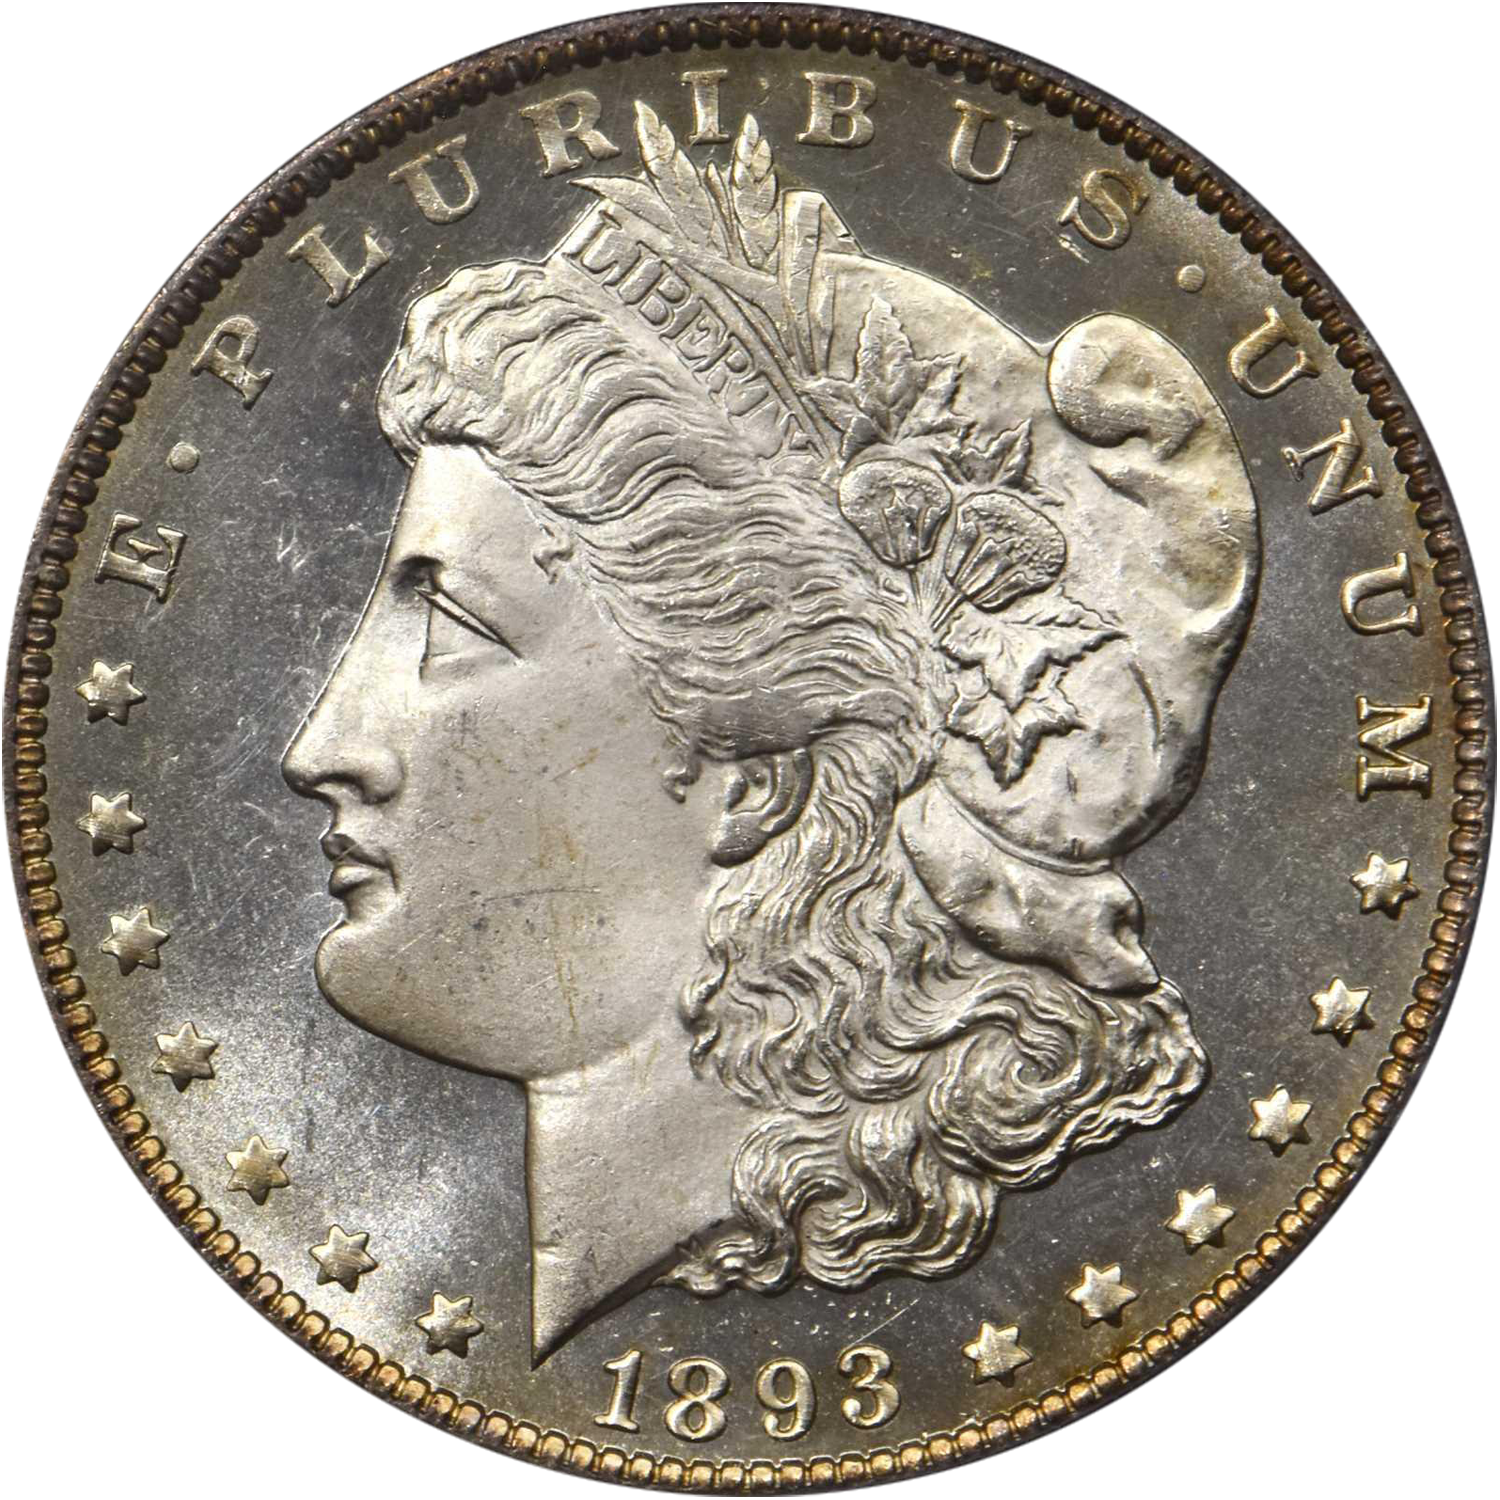 1893 new orleans mint morgan silver dollar value